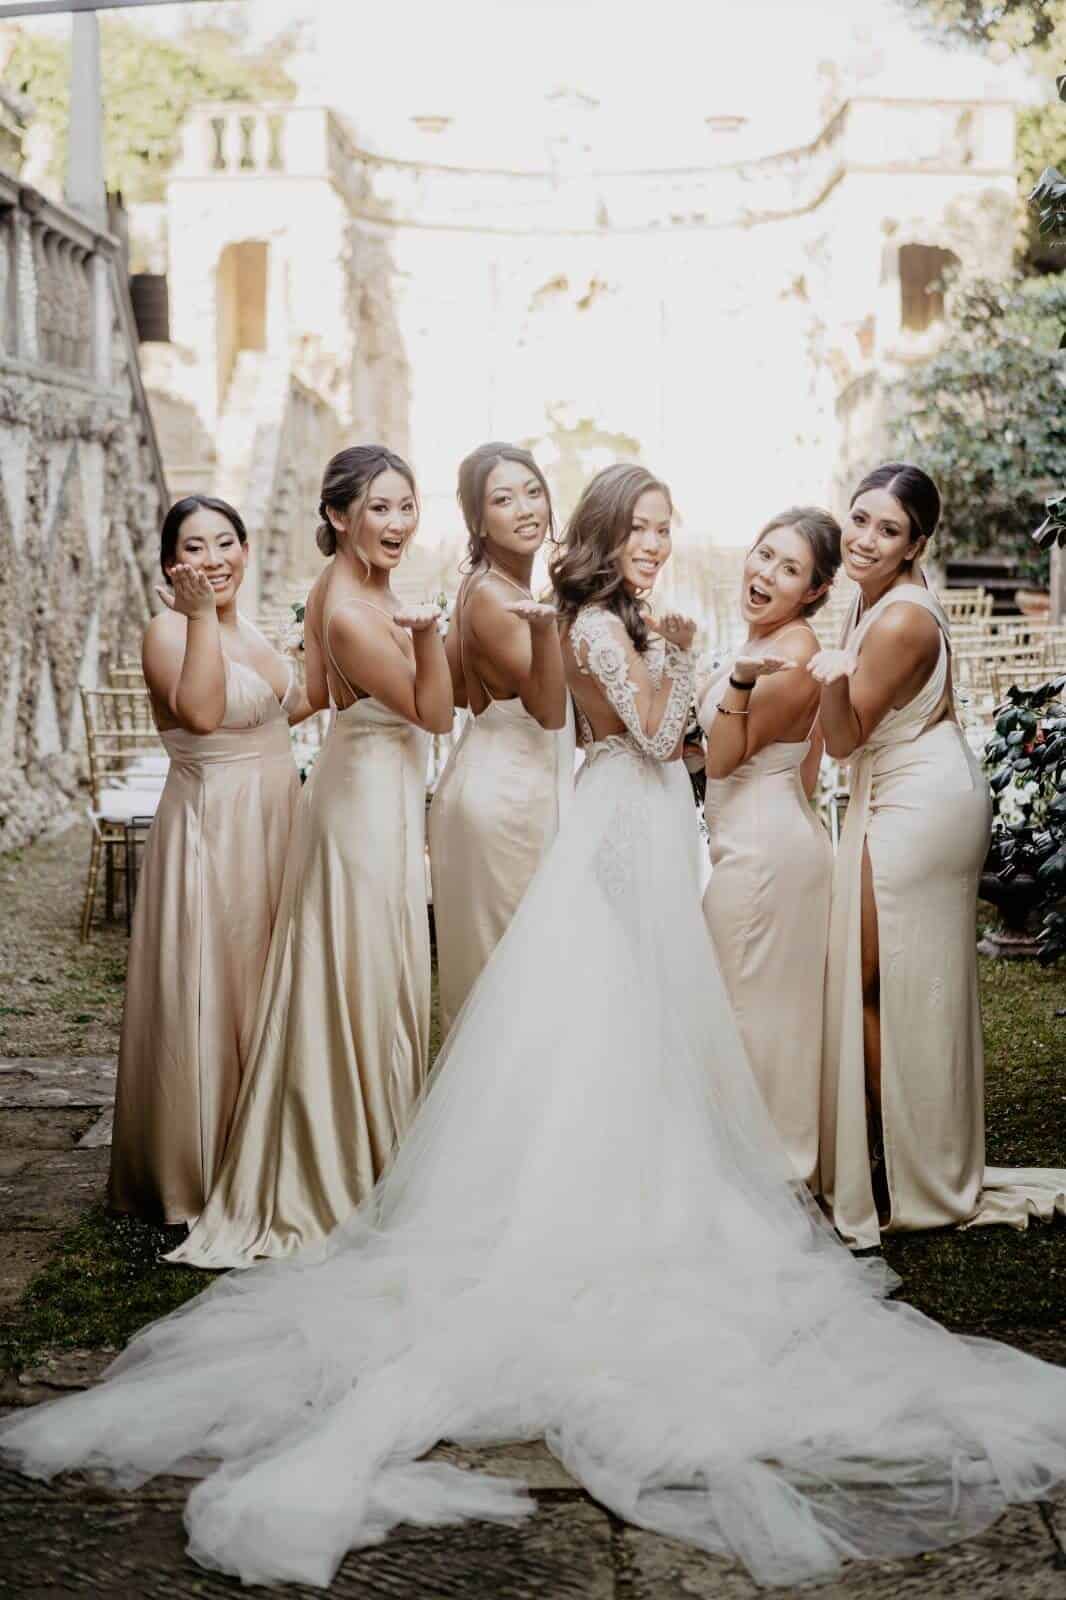 bridesmaid shows their dresses